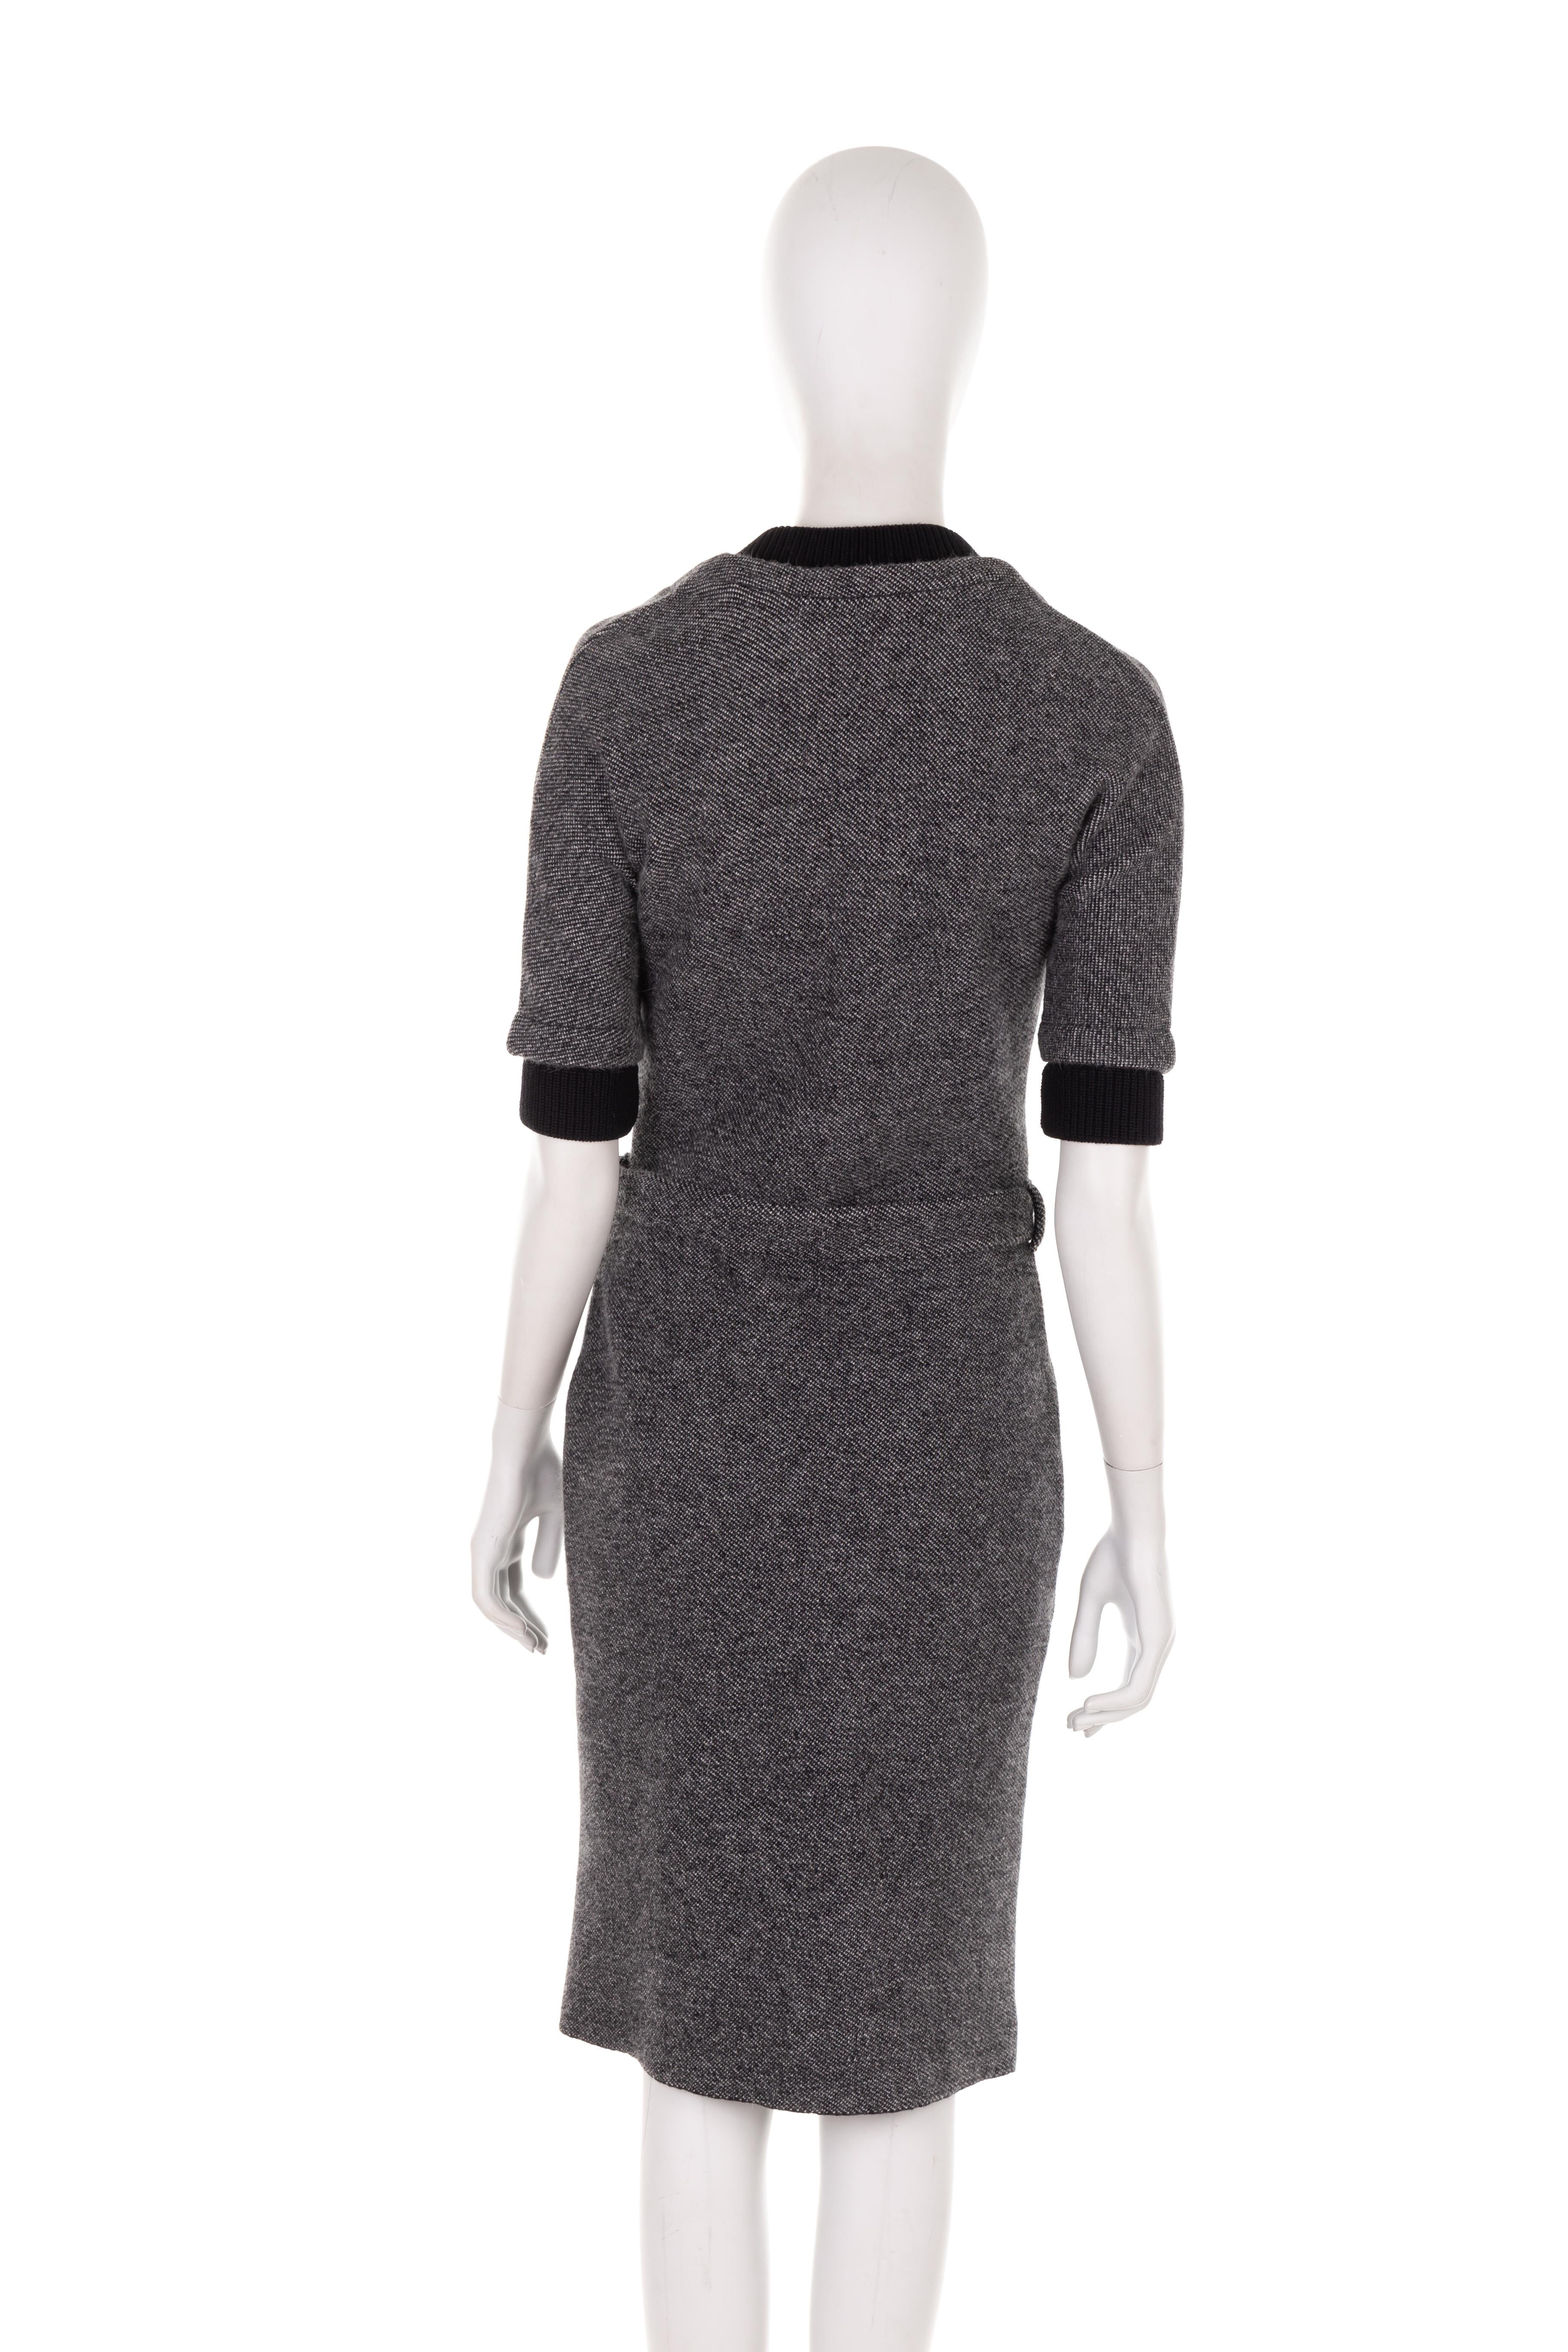 Women's Christian Dior by John Galliano F/W 2010 grey tweed button-up midi Dress For Sale